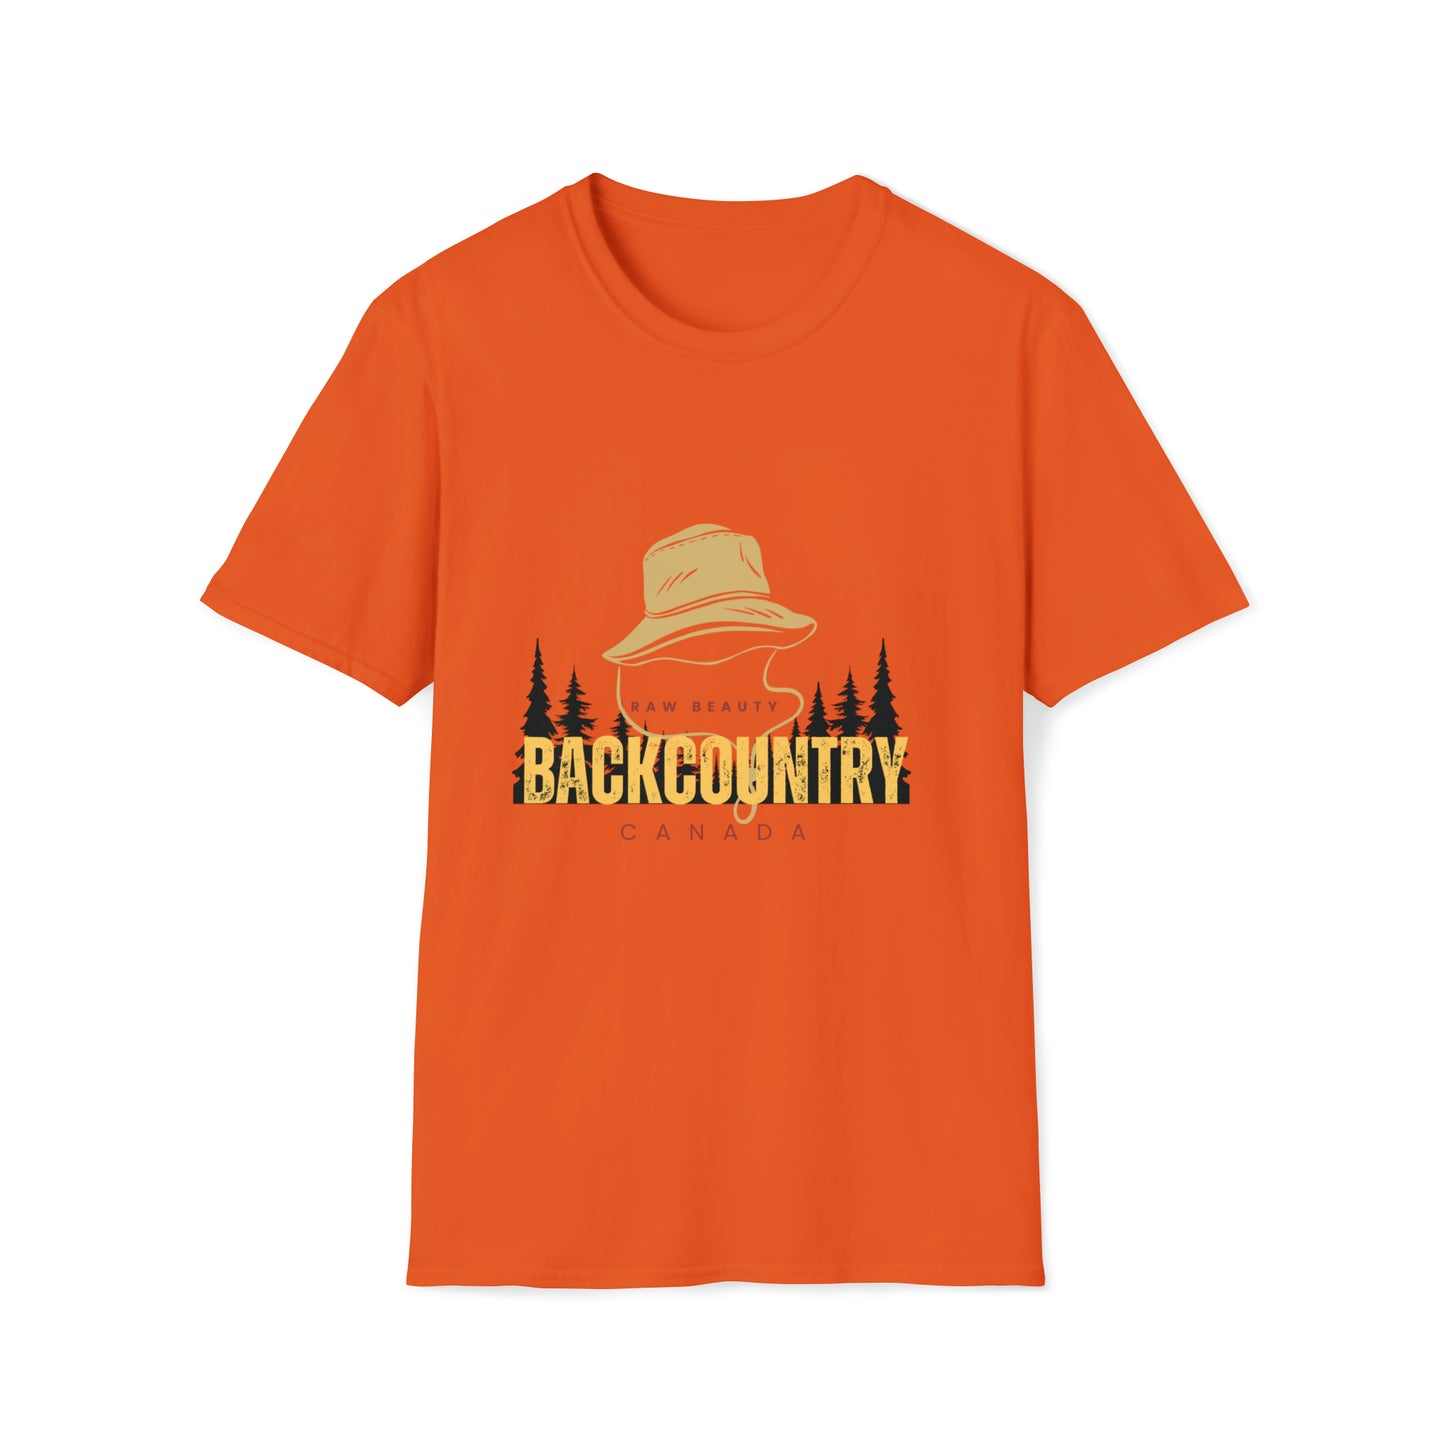 Backcountry - Raw Beauty